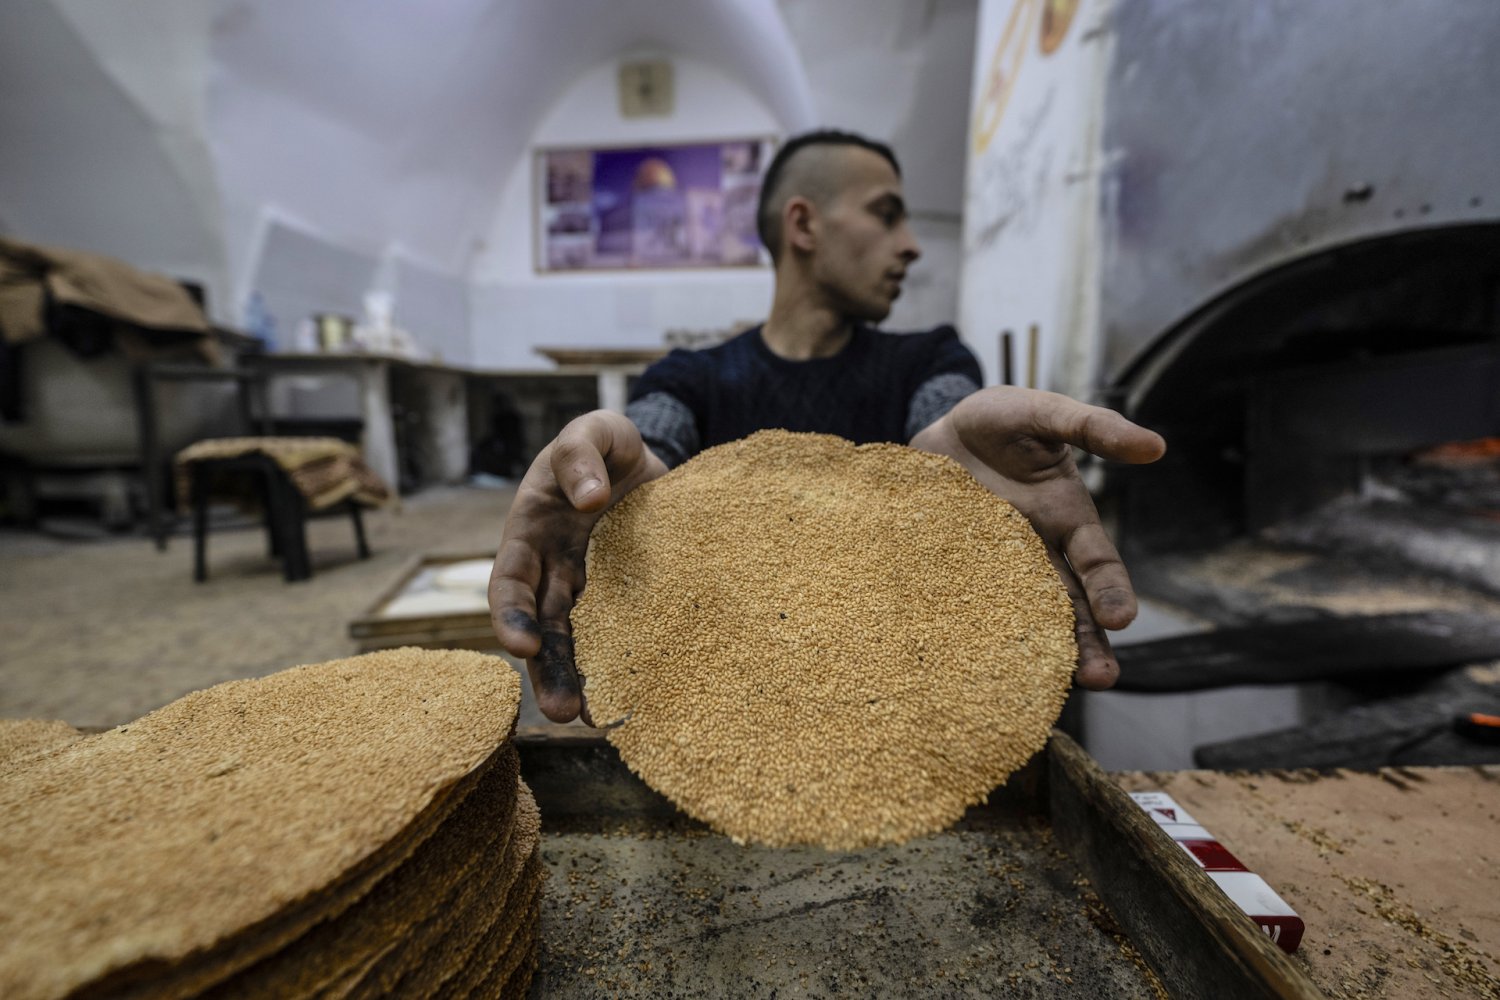 Jerusalem barazeq, a sweet popular during Ramadan